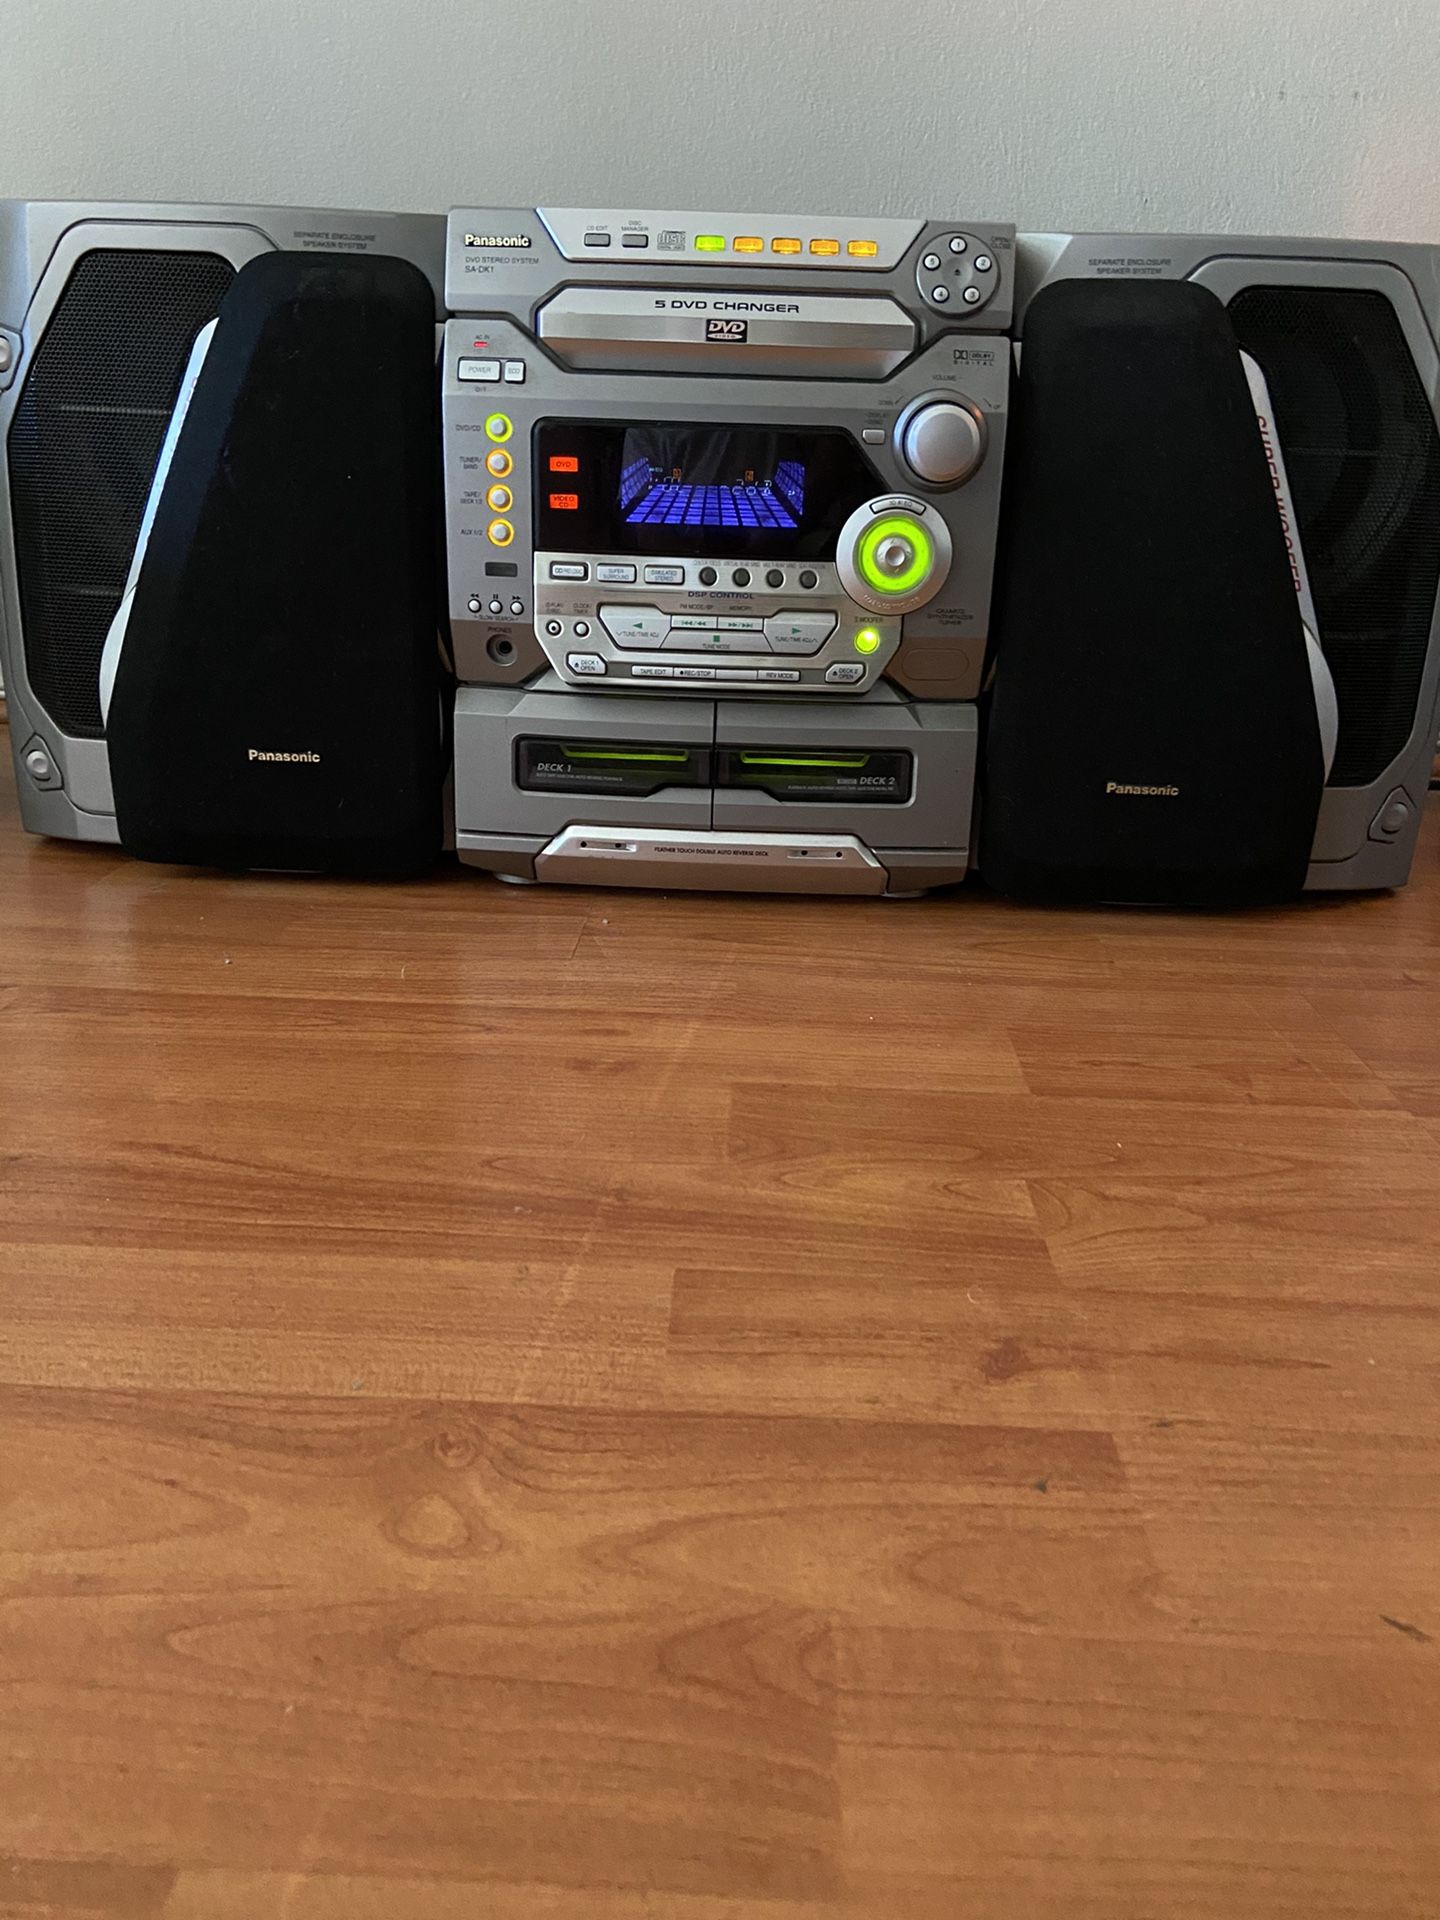 Panasonic SK-DK1 ,5 DVD changers stereo system